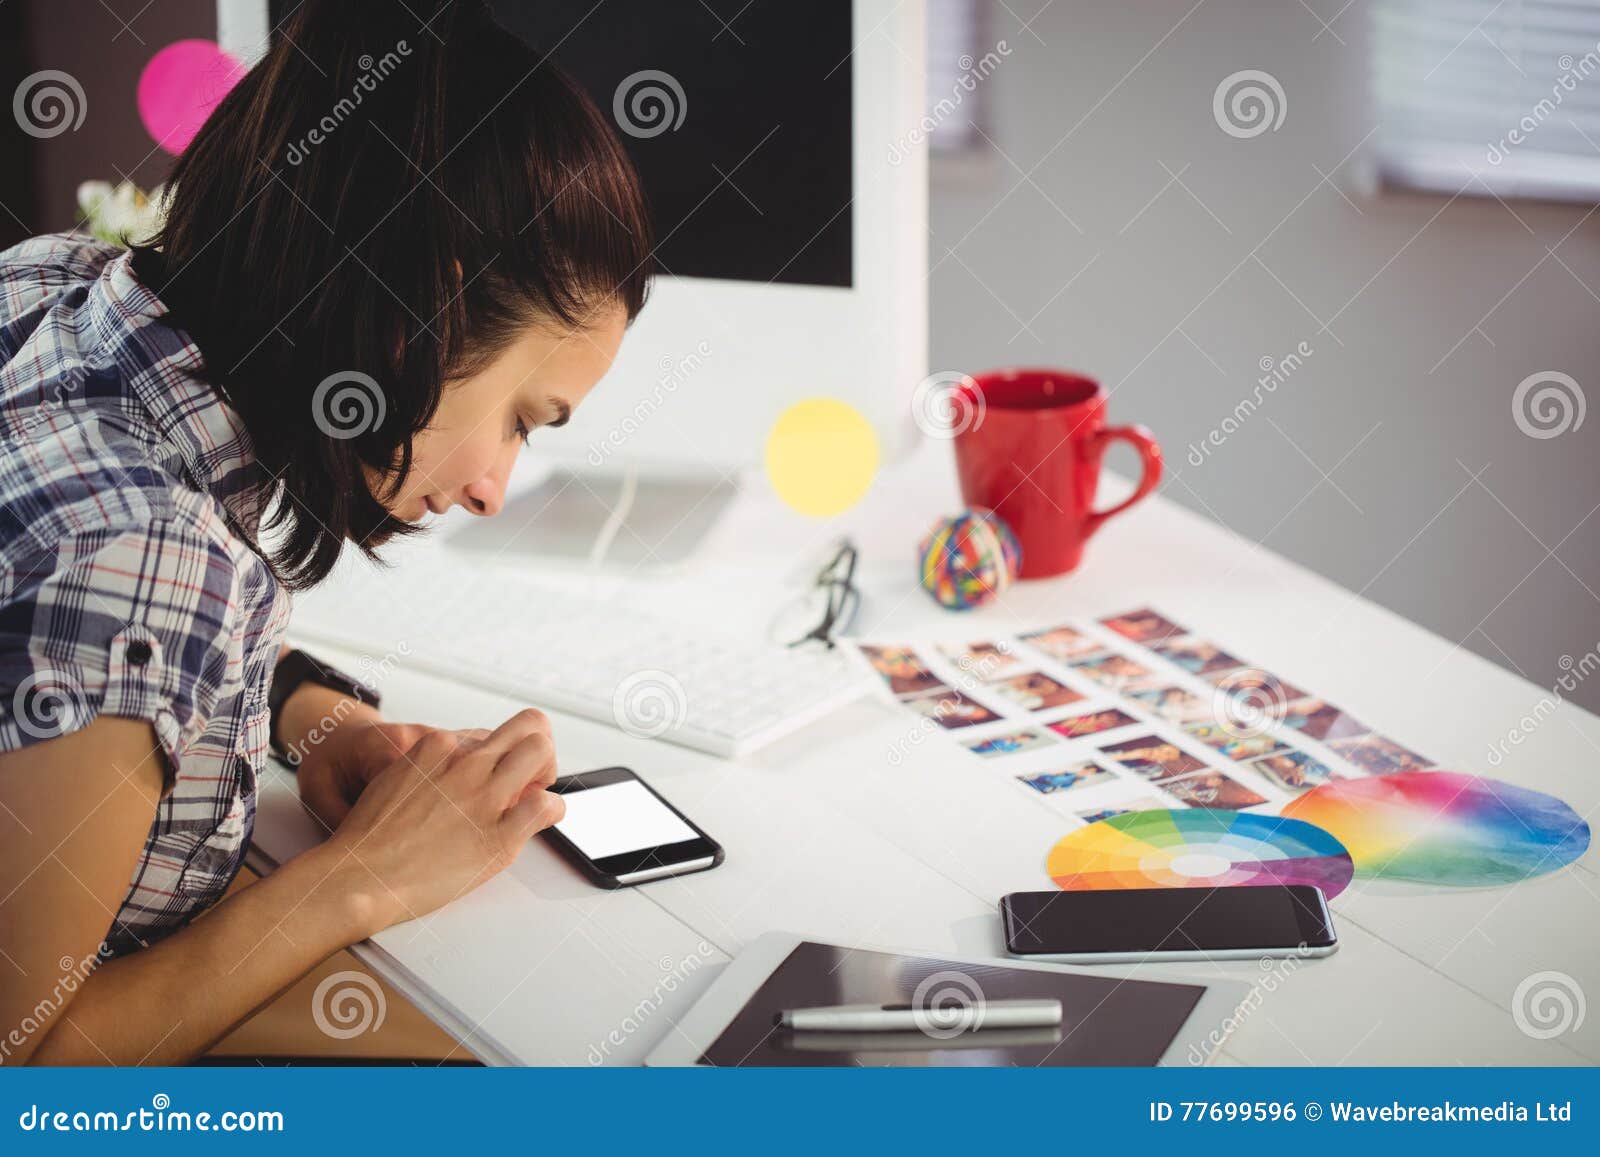 woman using mobile phone in creative ffice